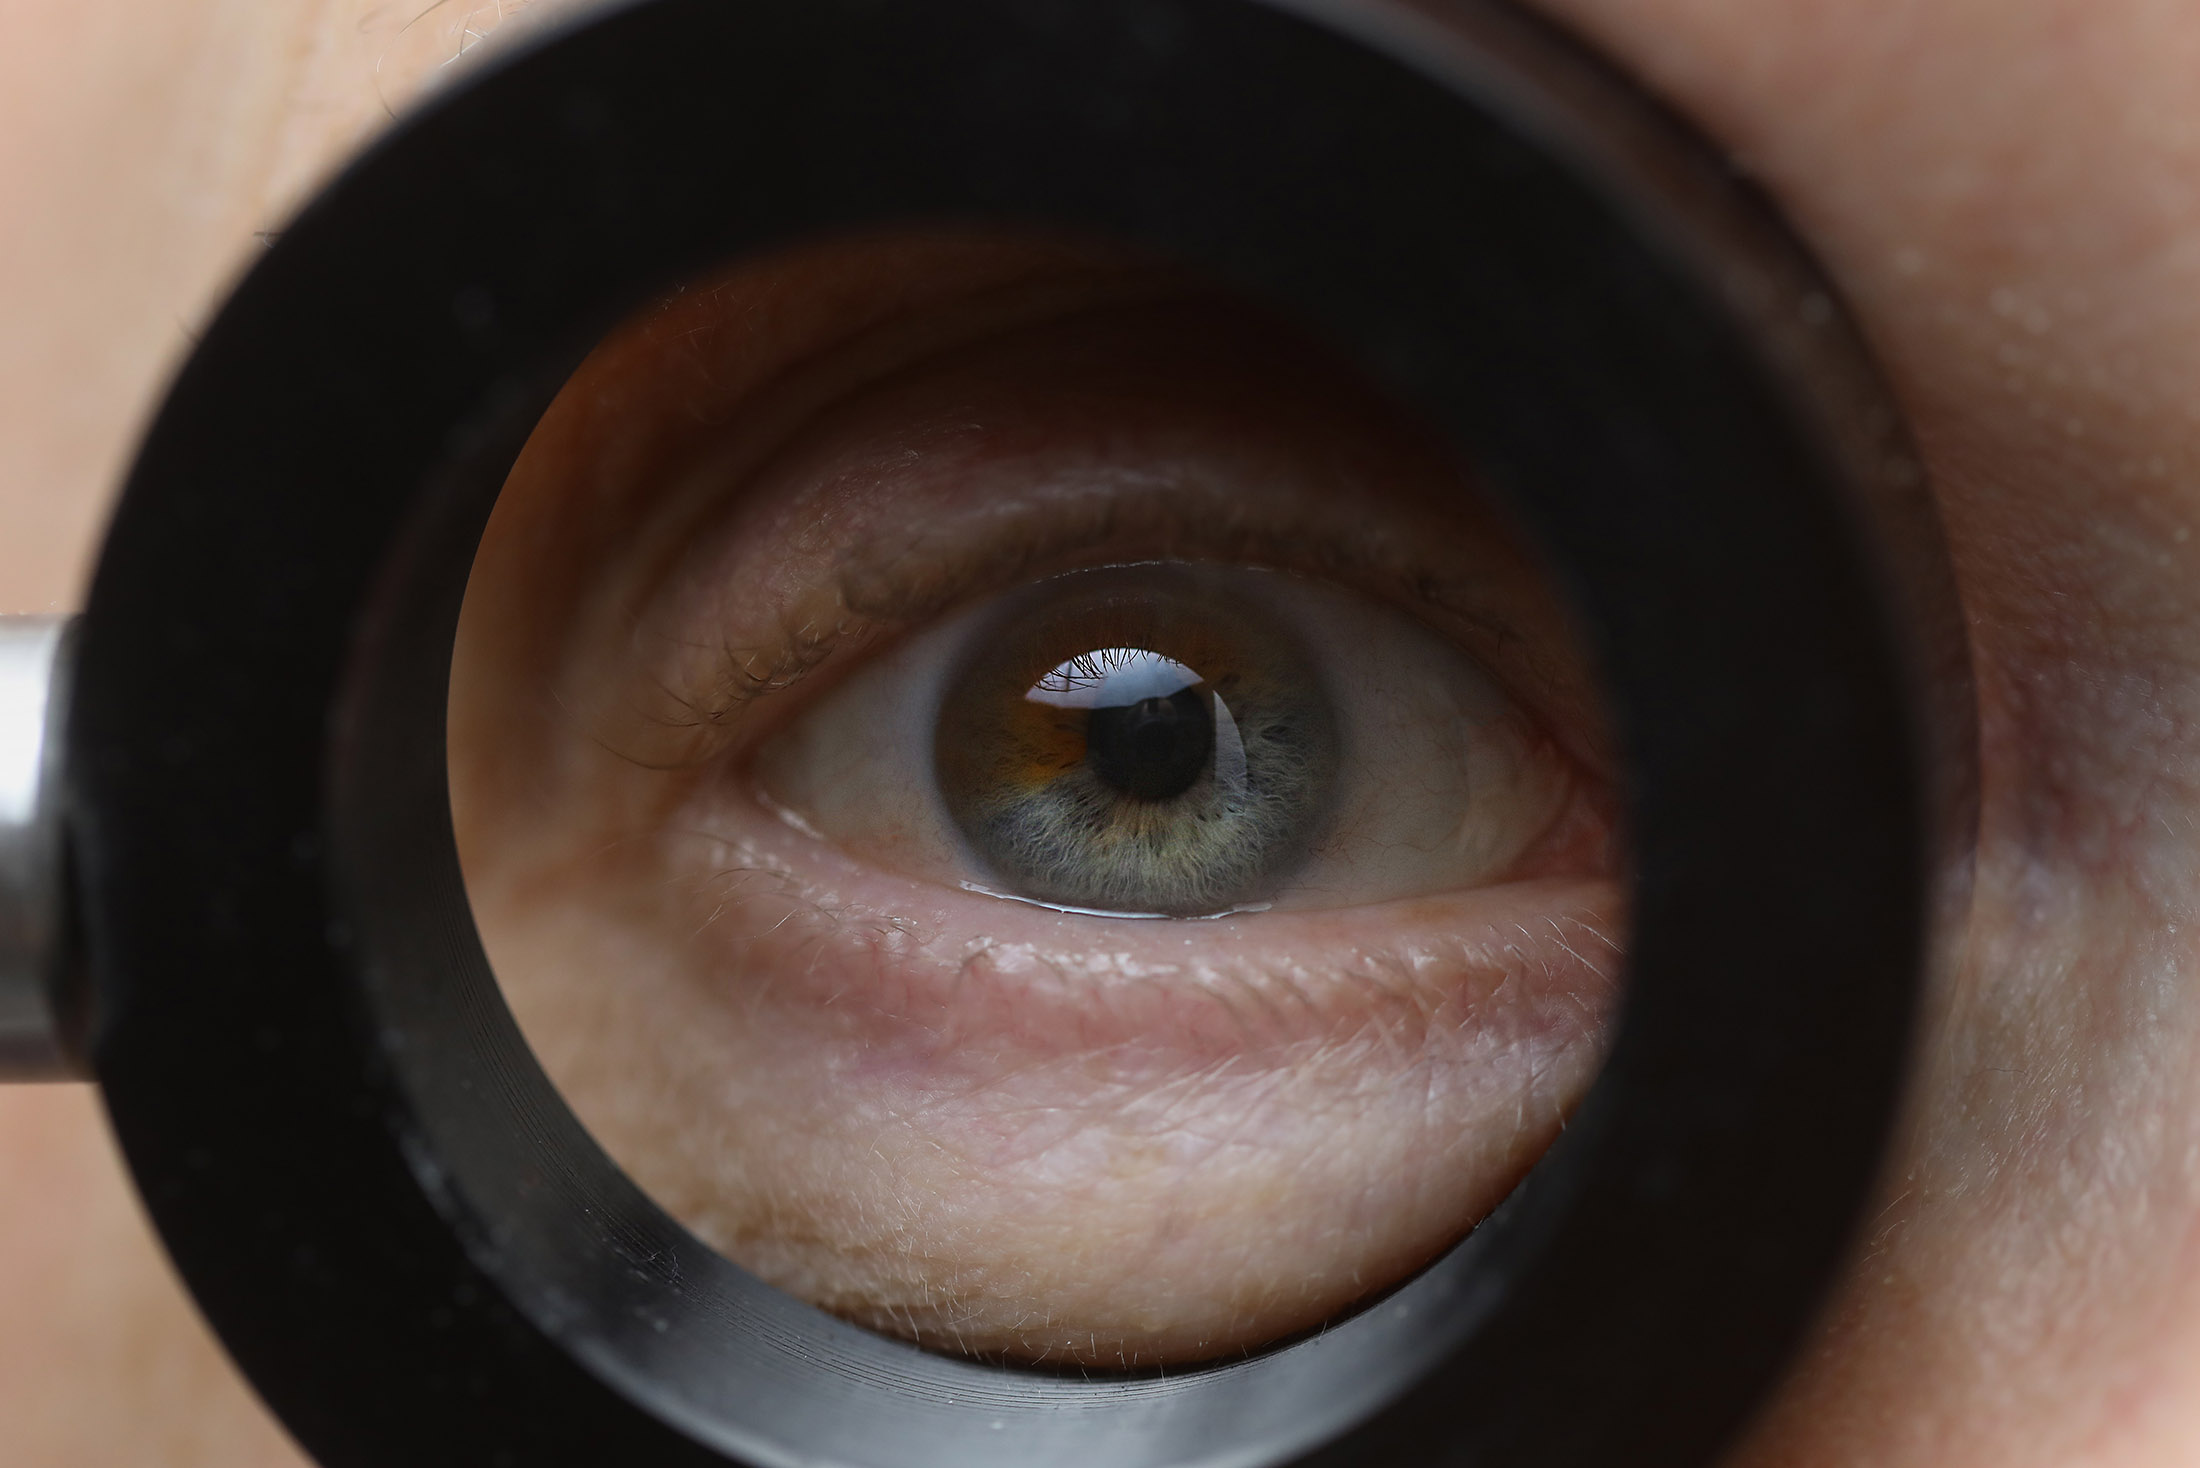 Eyeball as viewed by optical glucometer